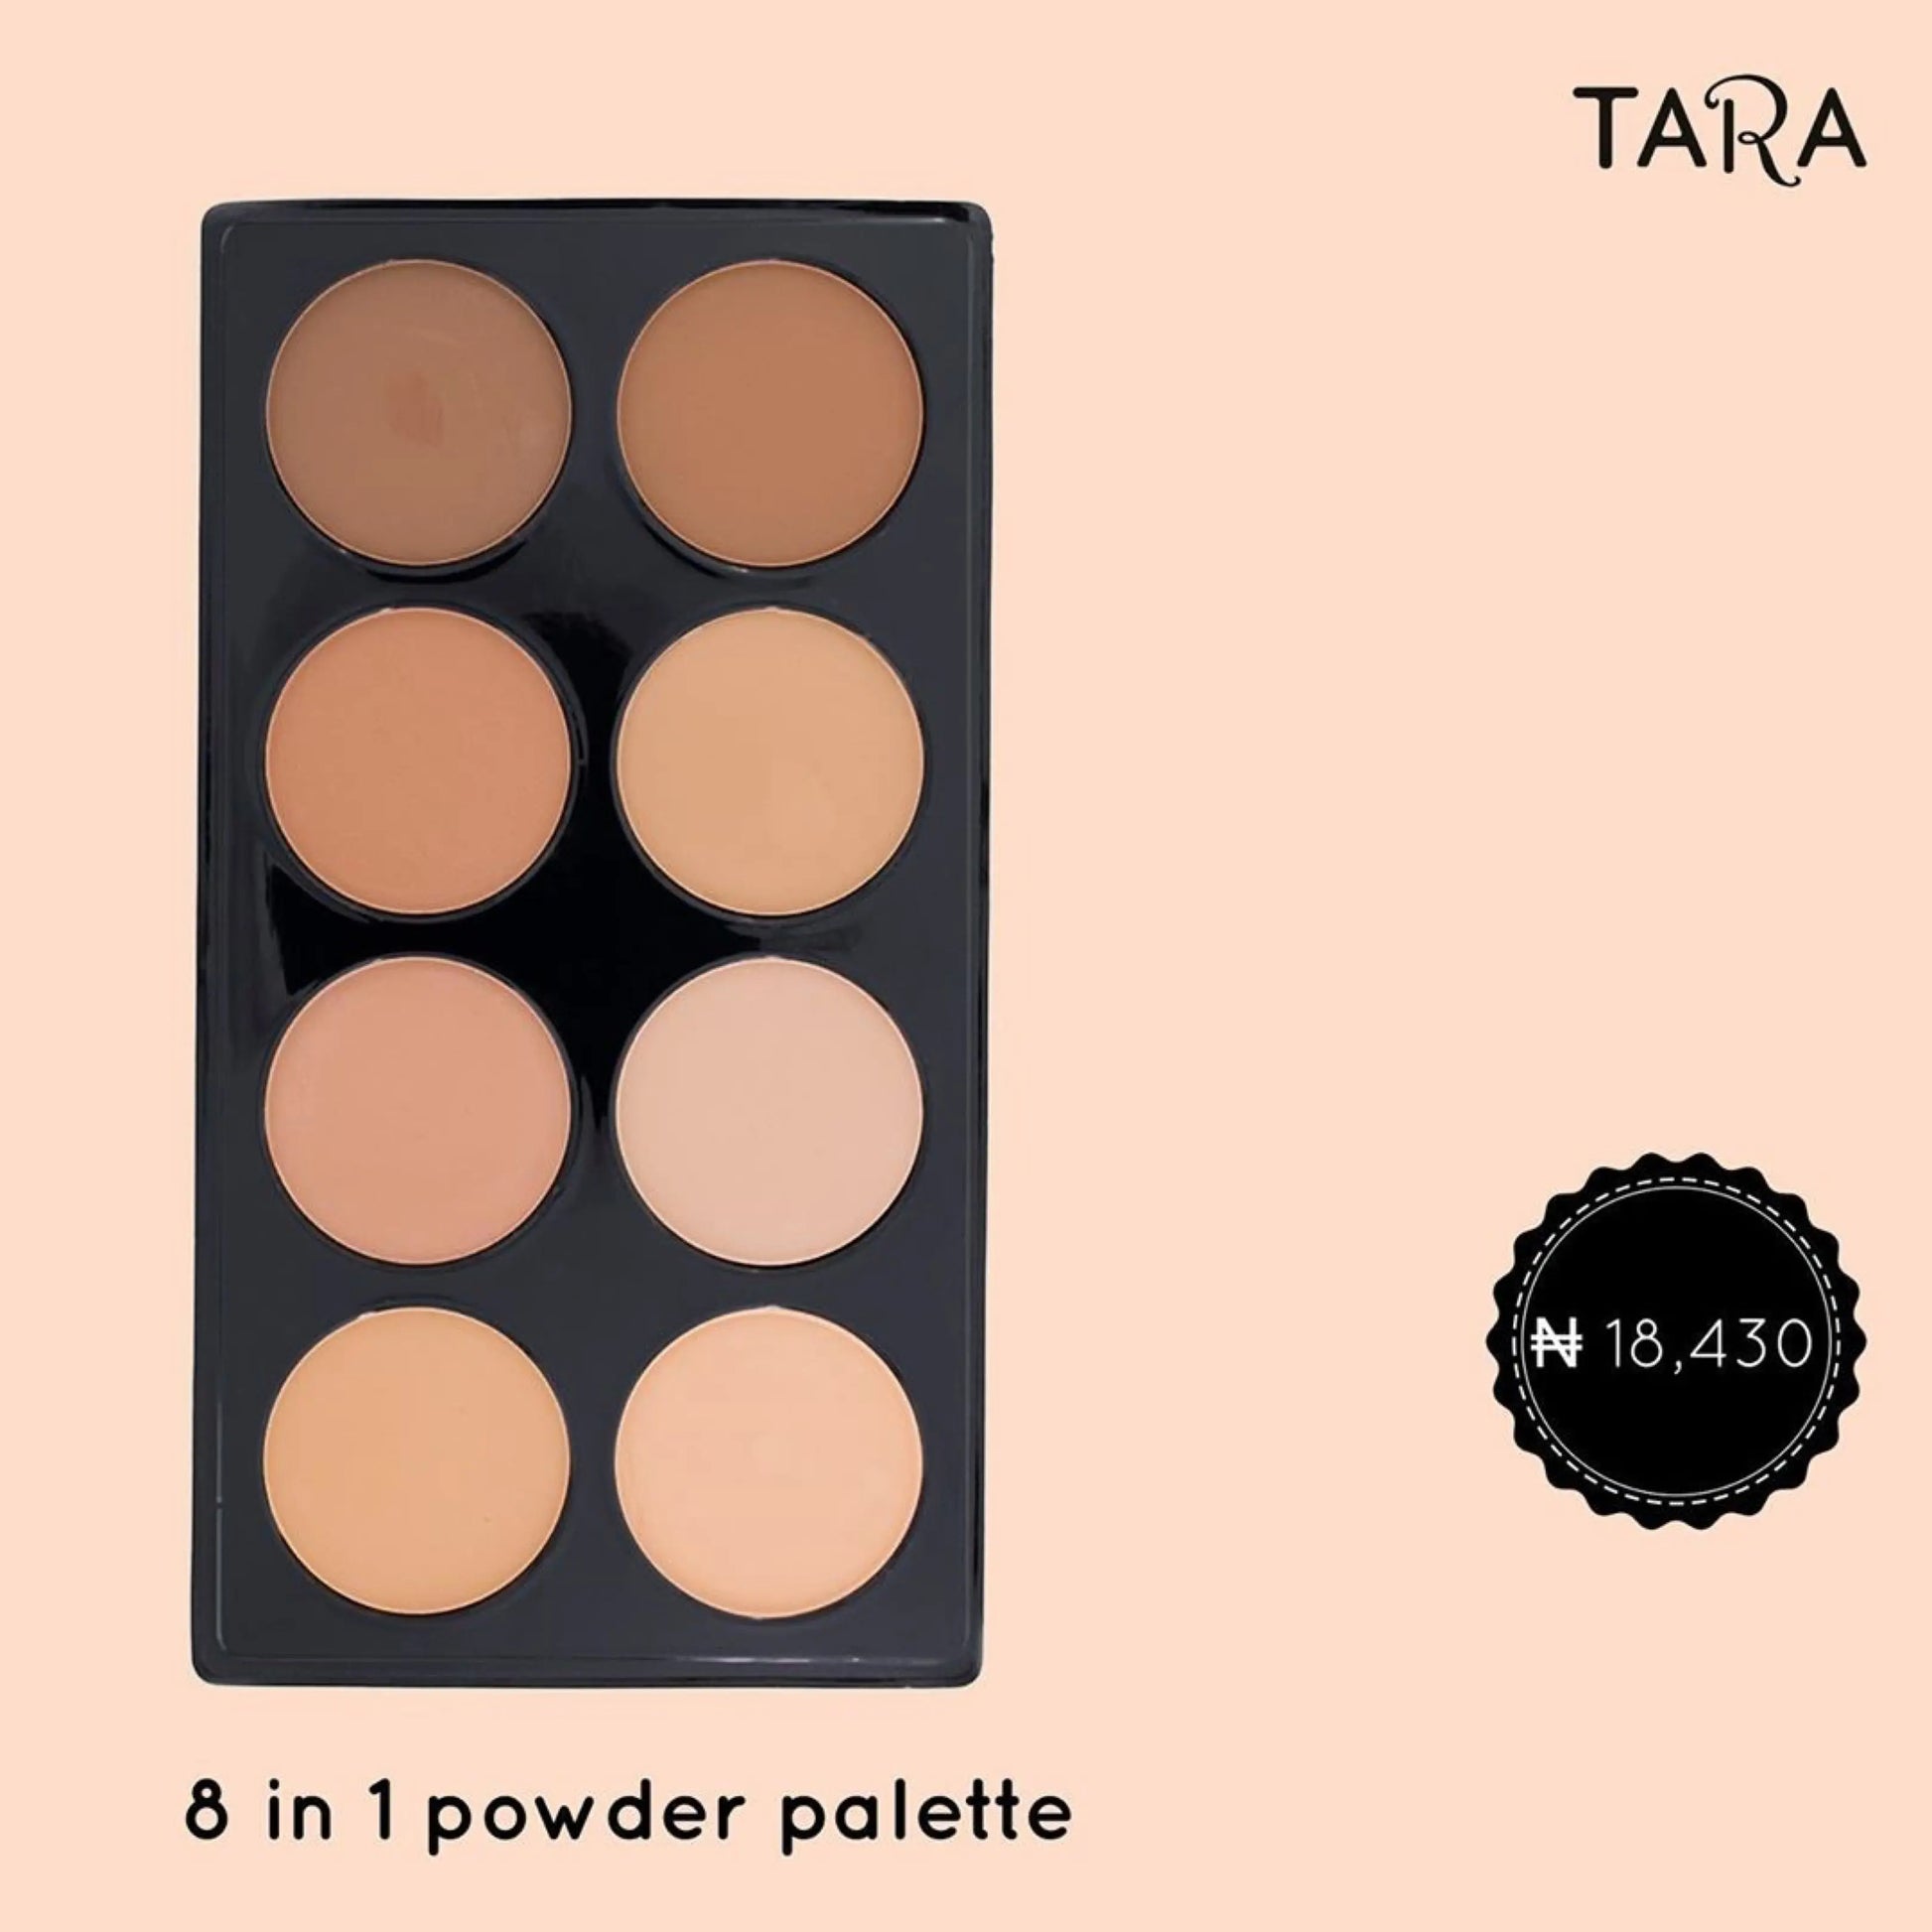 Tara 8 in 1 Powder Palette La Mimz Beauty & Fashion Store